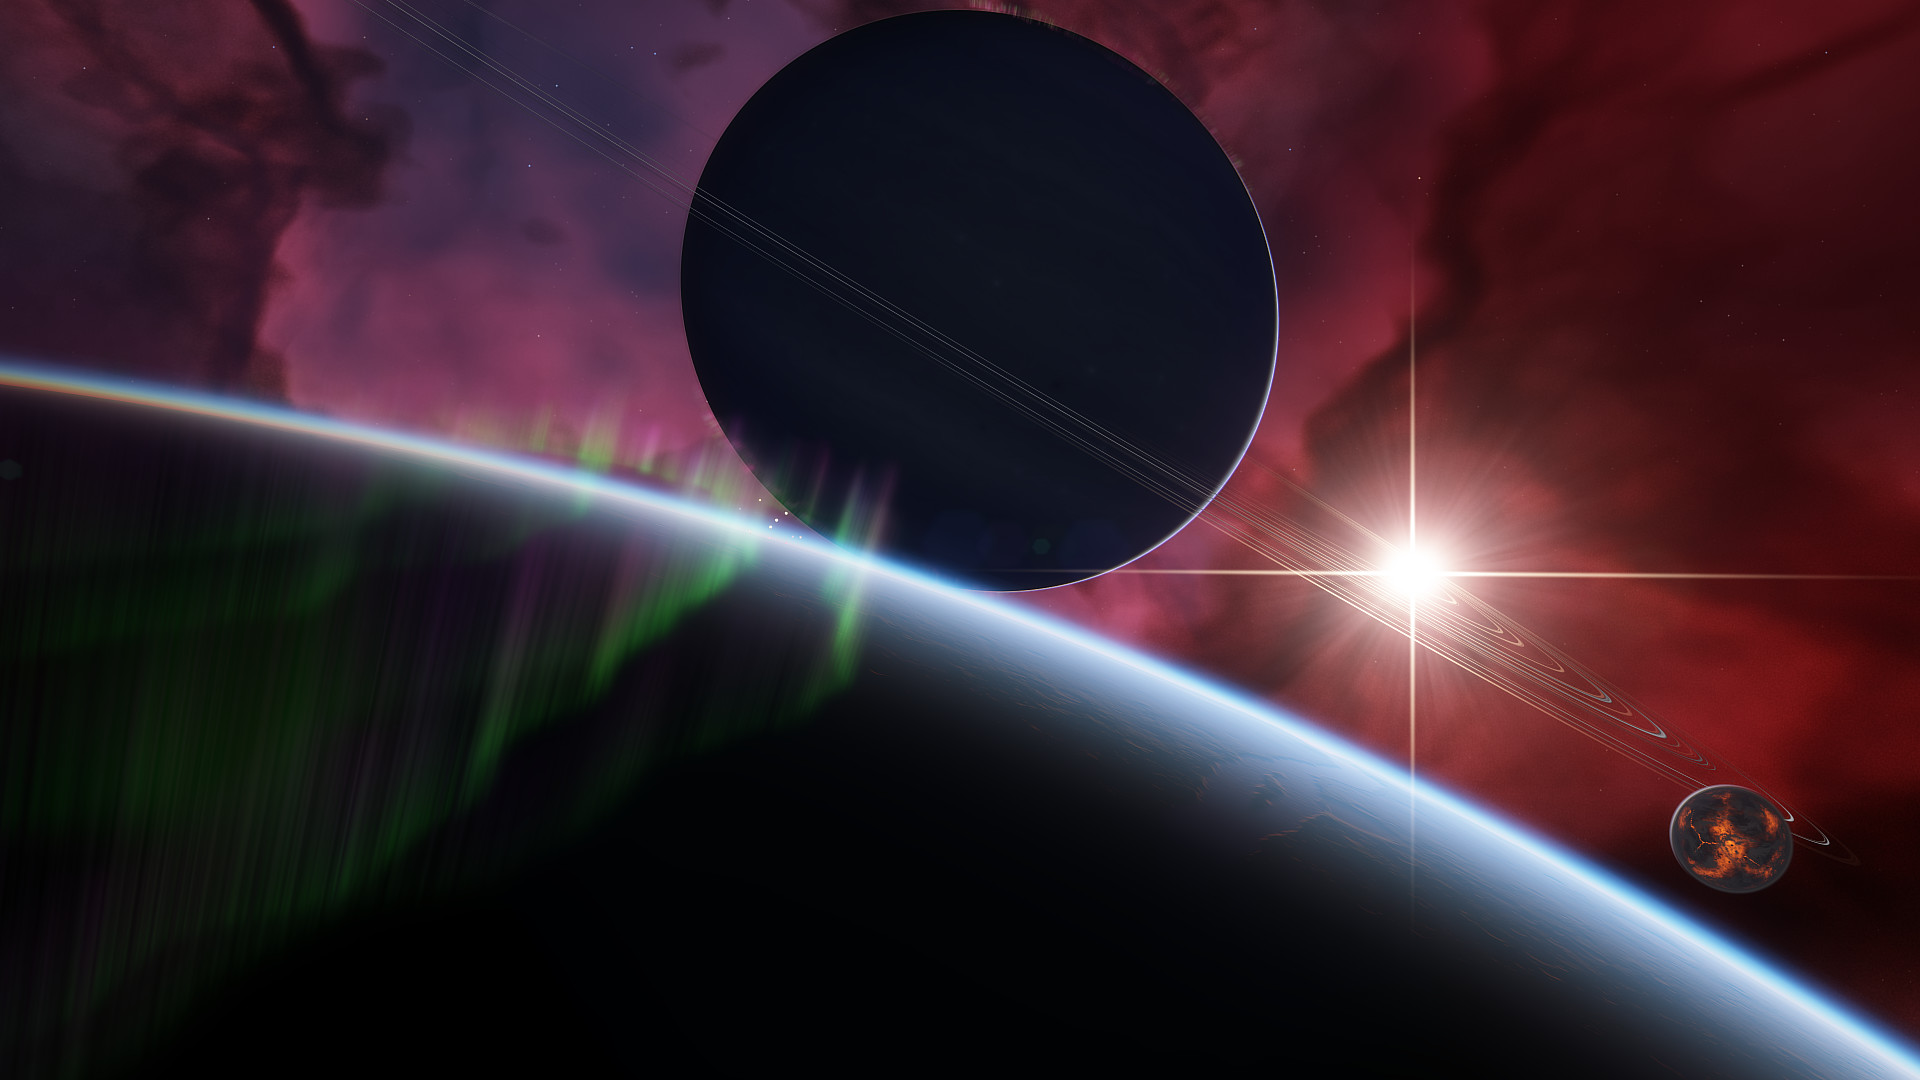 SpaceEngine screenshot